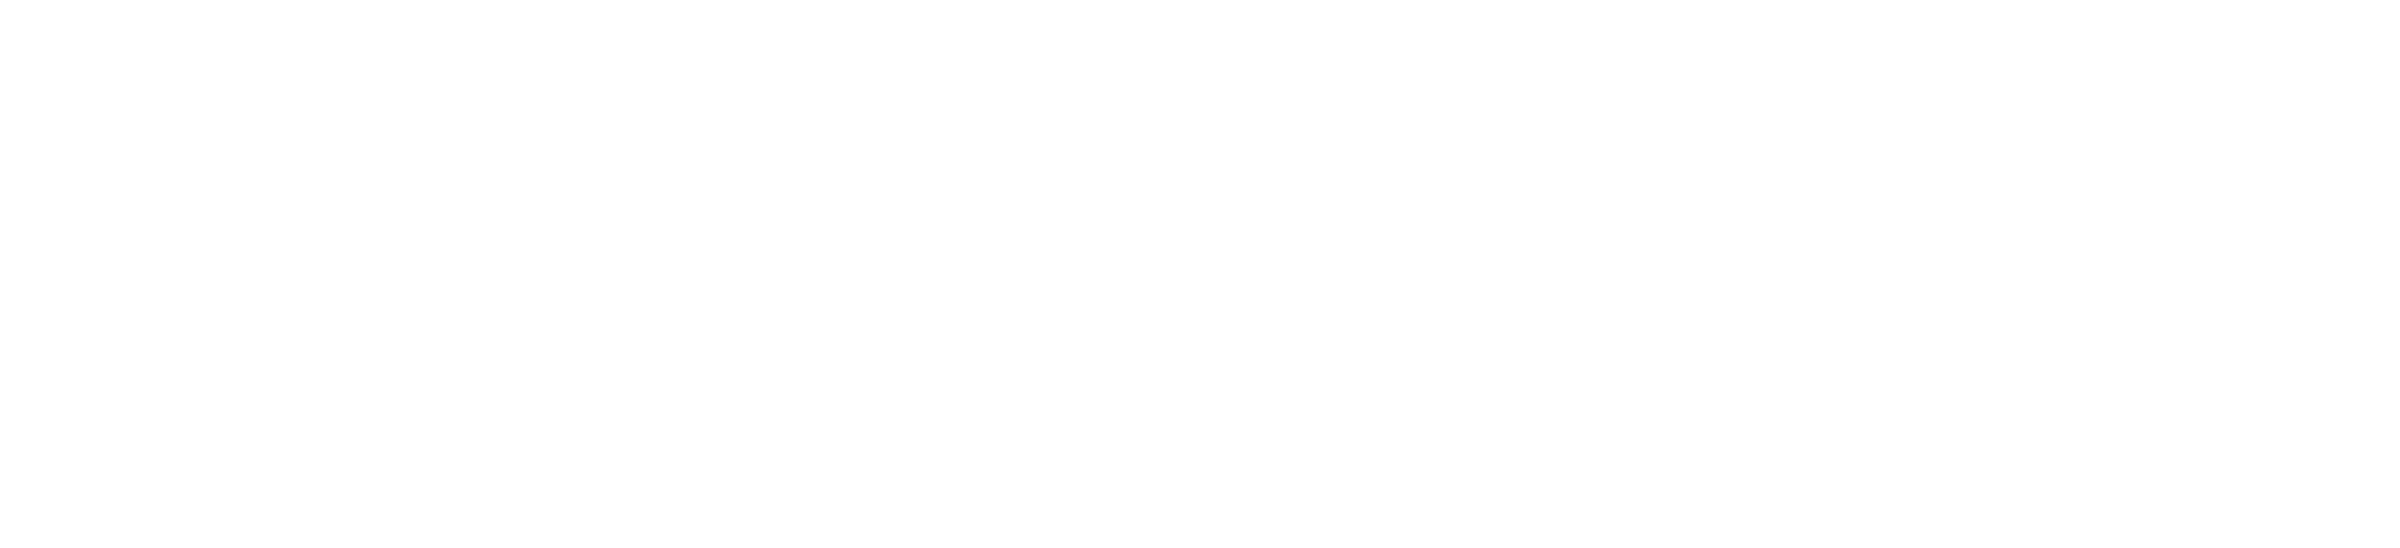 HMSA foundation+logo.png